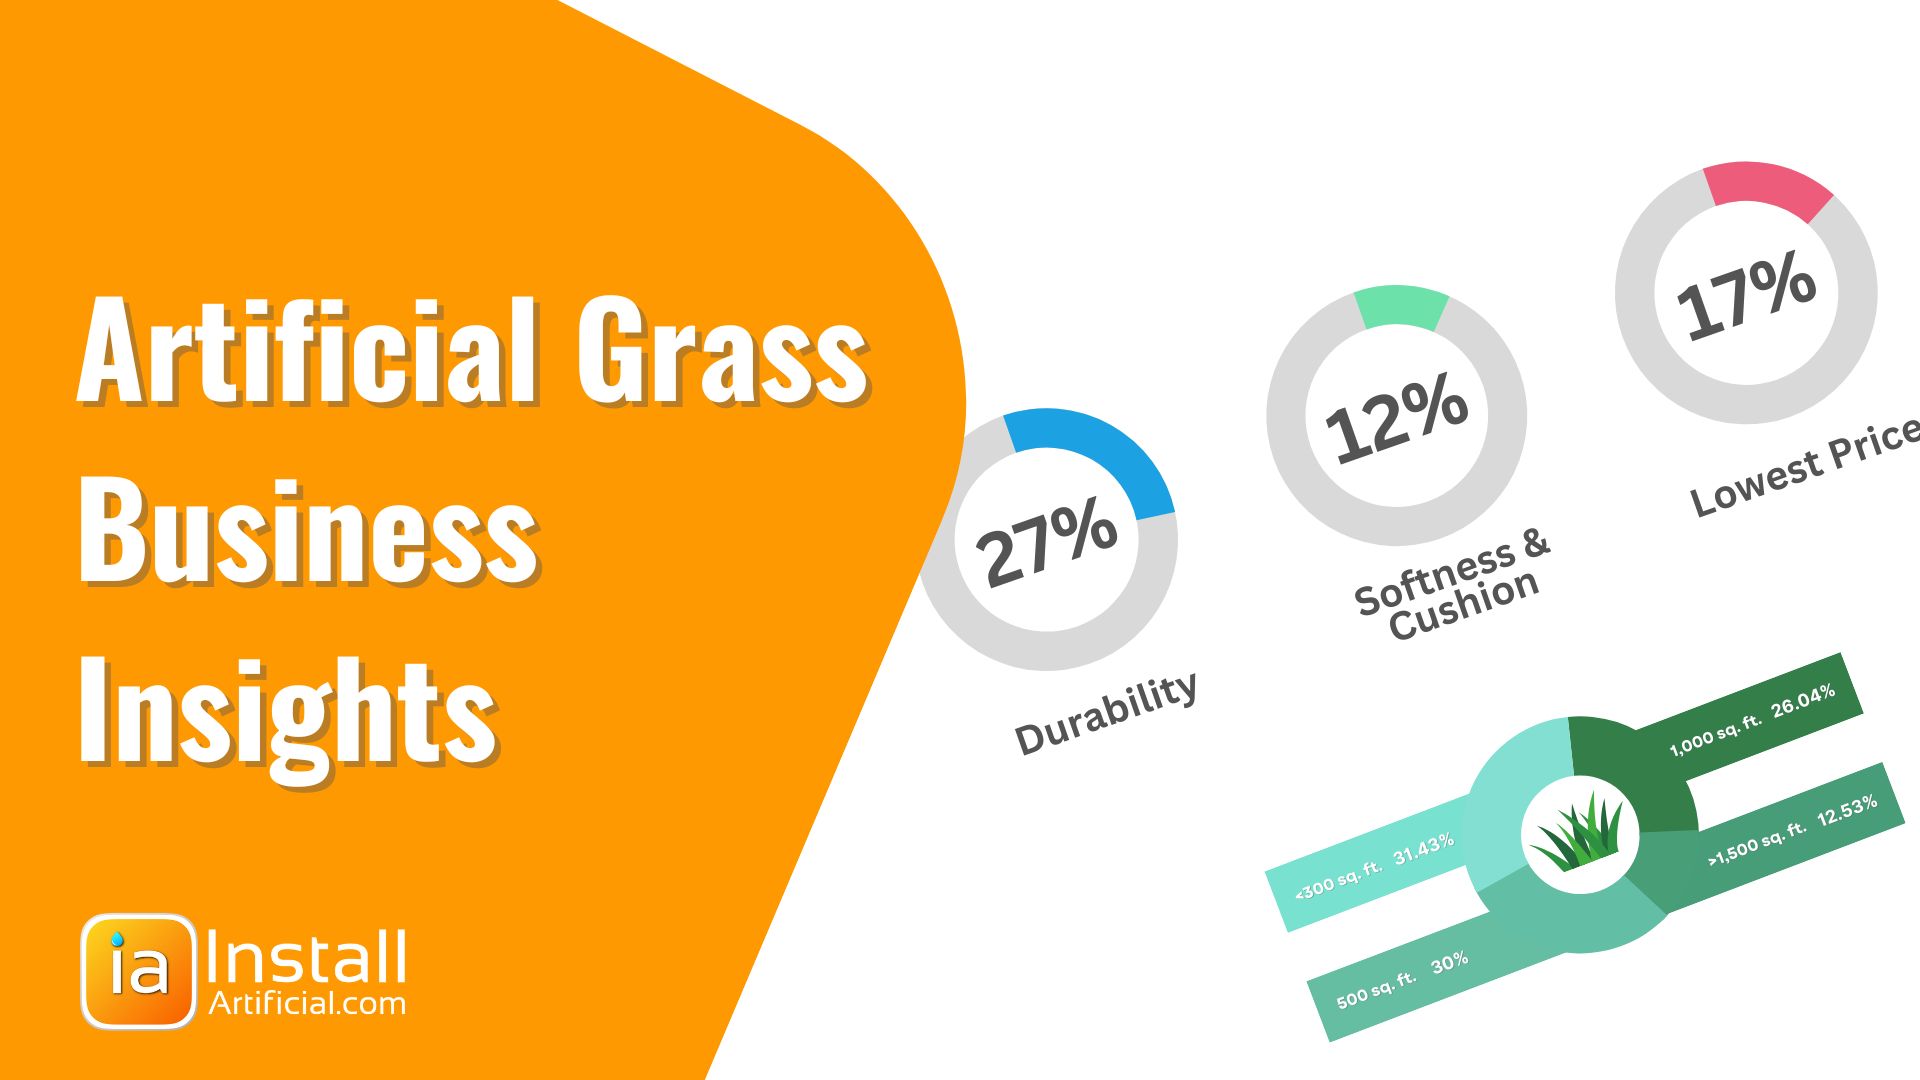 artificial grass market trends data and business insights